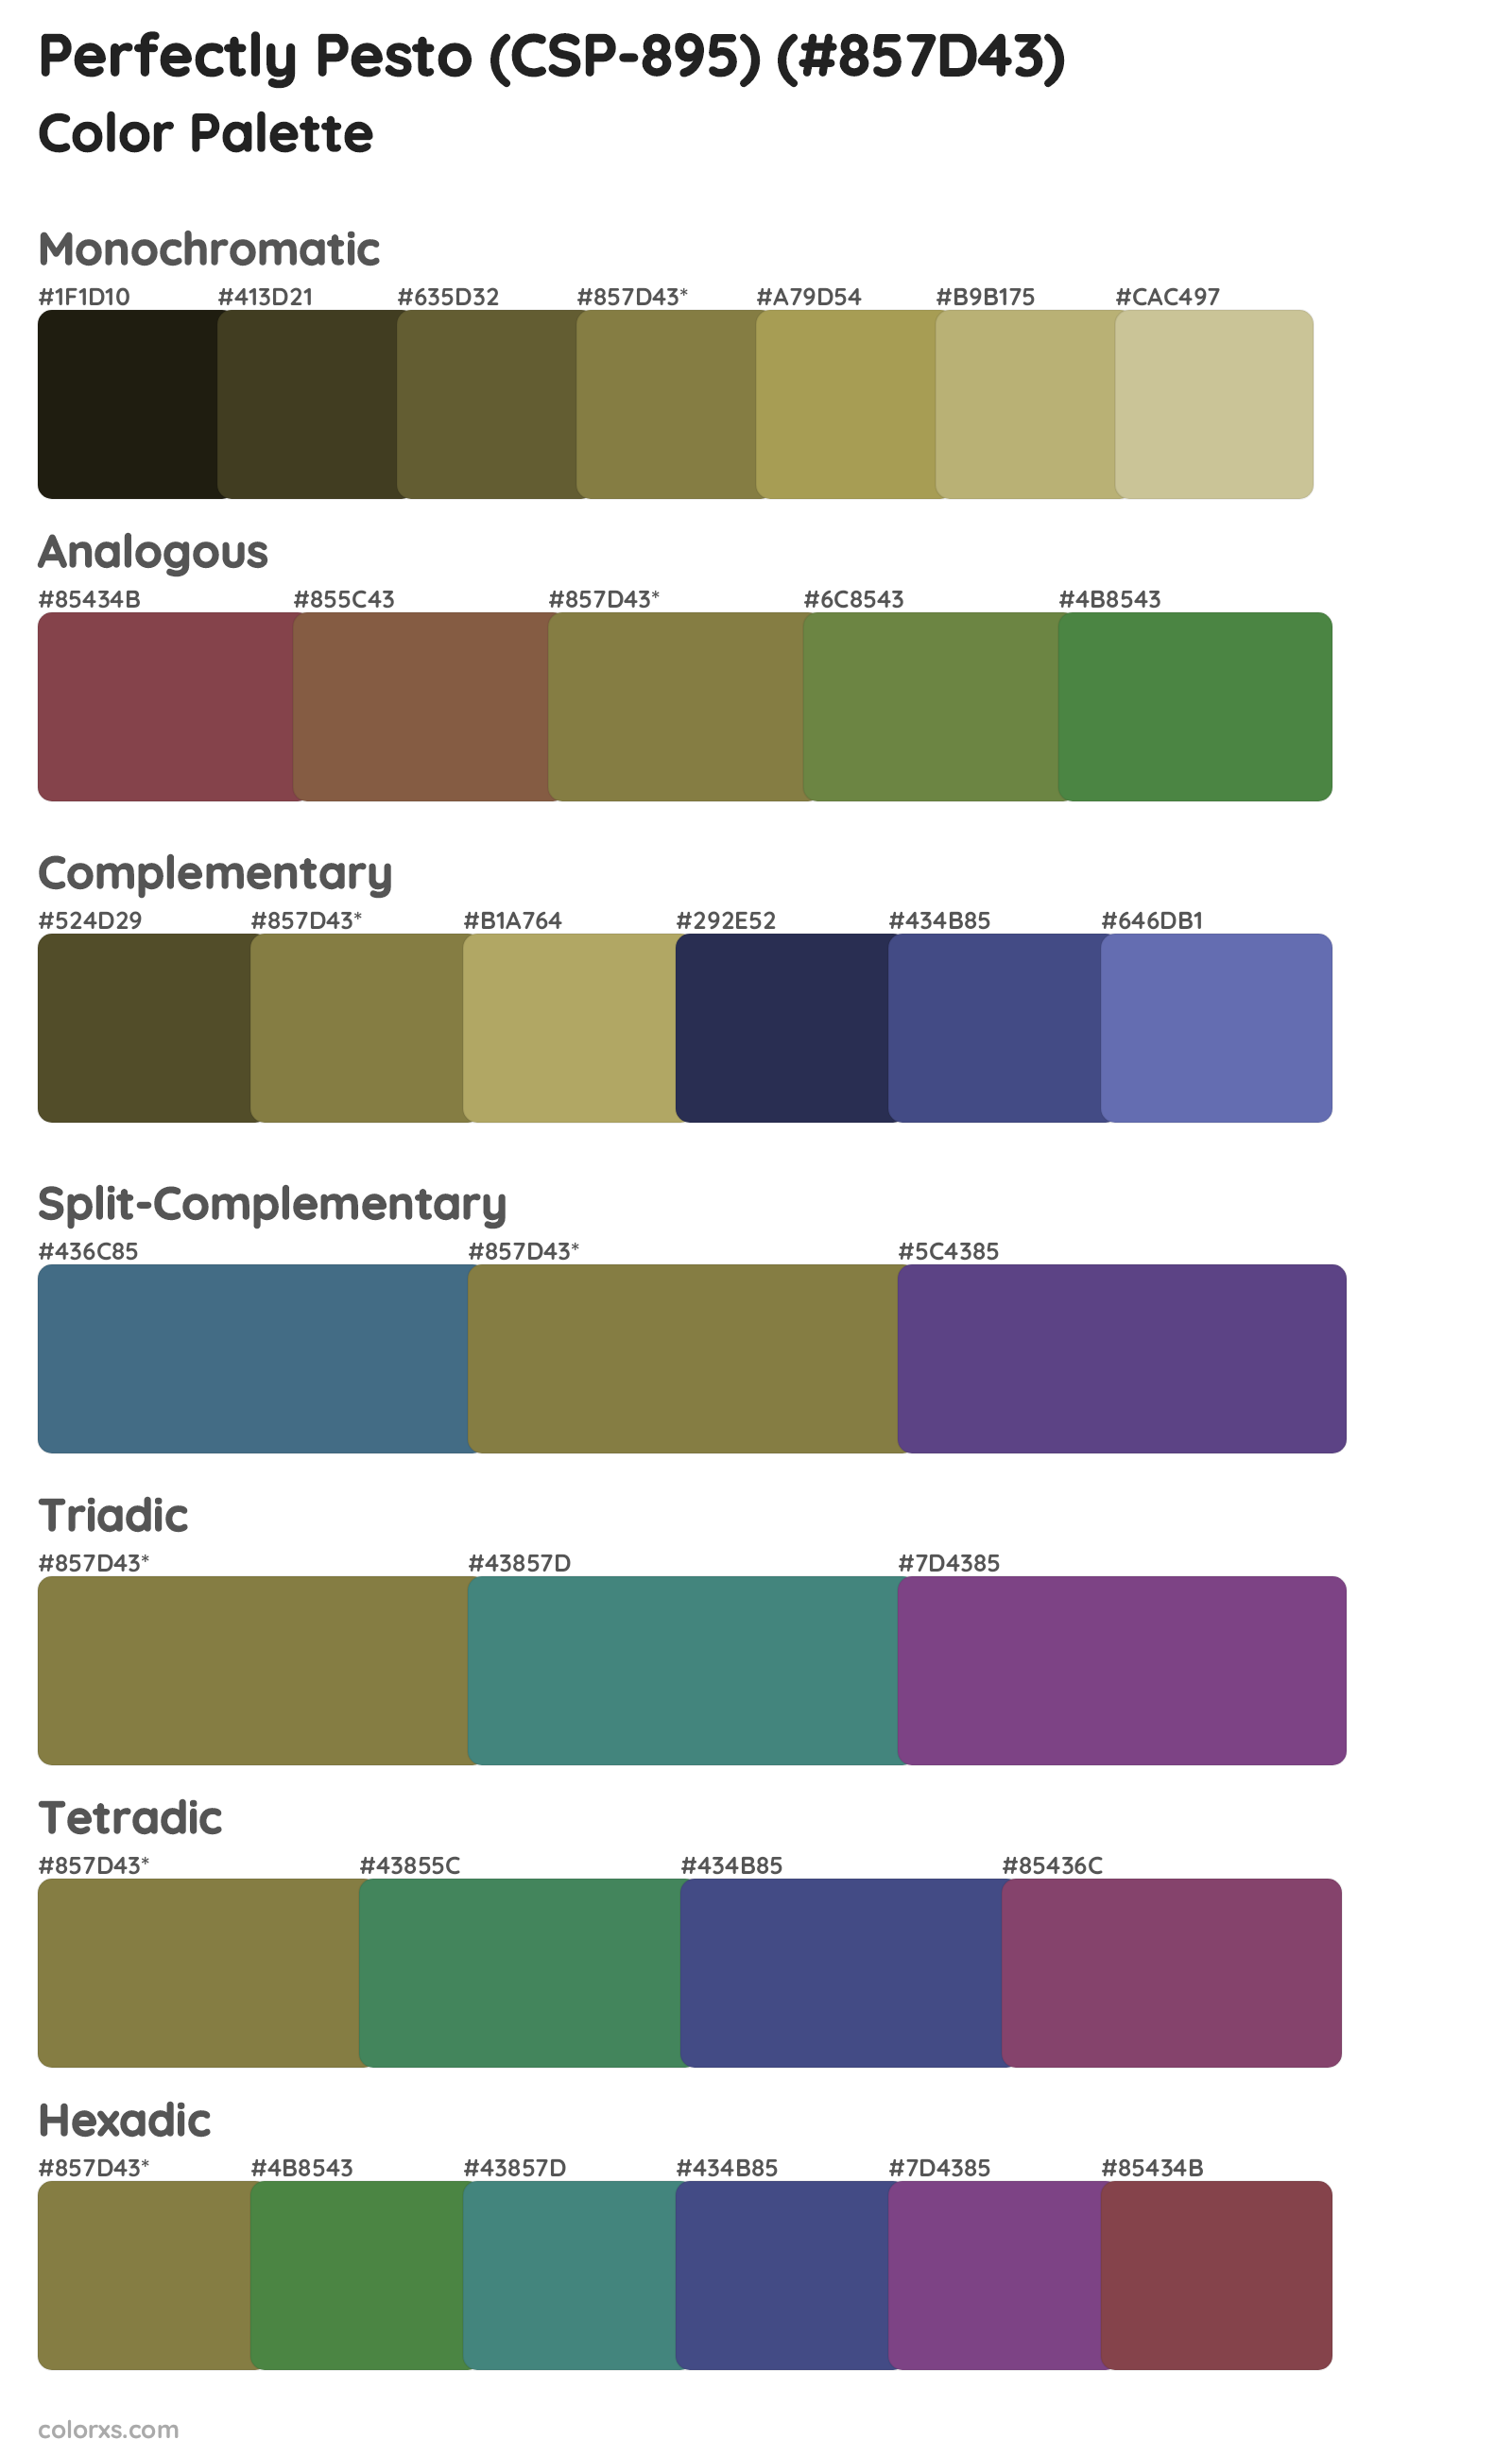 Perfectly Pesto (CSP-895) Color Scheme Palettes